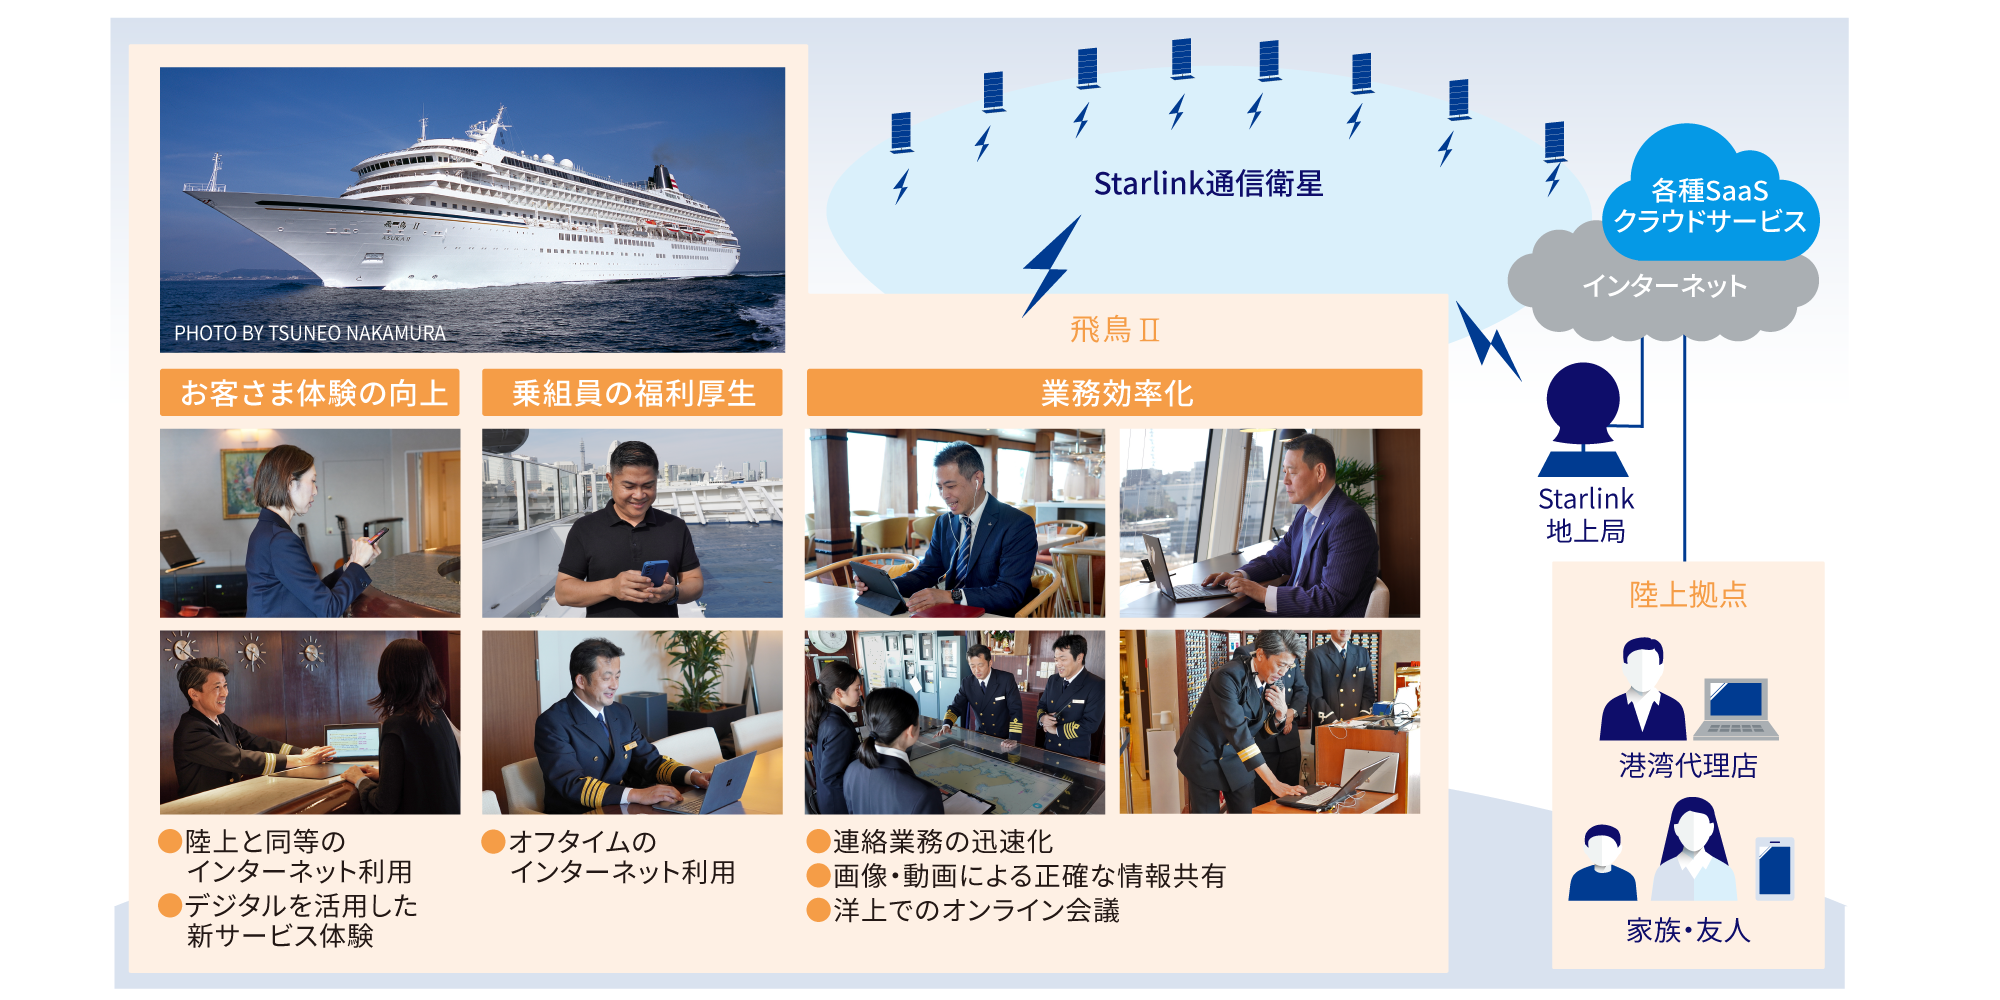 Starlink通信衛星を導入したことで『飛鳥Ⅱ』とStarlink地上局がつながり、各種SaaSクラウドサービスと陸上抛点（港湾代理店、家族・友人）につながるように。これによりお客さま体験の向上（陸上と同等のインターネット利用、デジタルを活用した新サービス体験）と乗組員の福利厚生（オフタイムのインターネット利用）、業務効率化（連絡業務の迅速化、画像・動画による正確な情報共有、洋上でのオンライン会議）が実現。